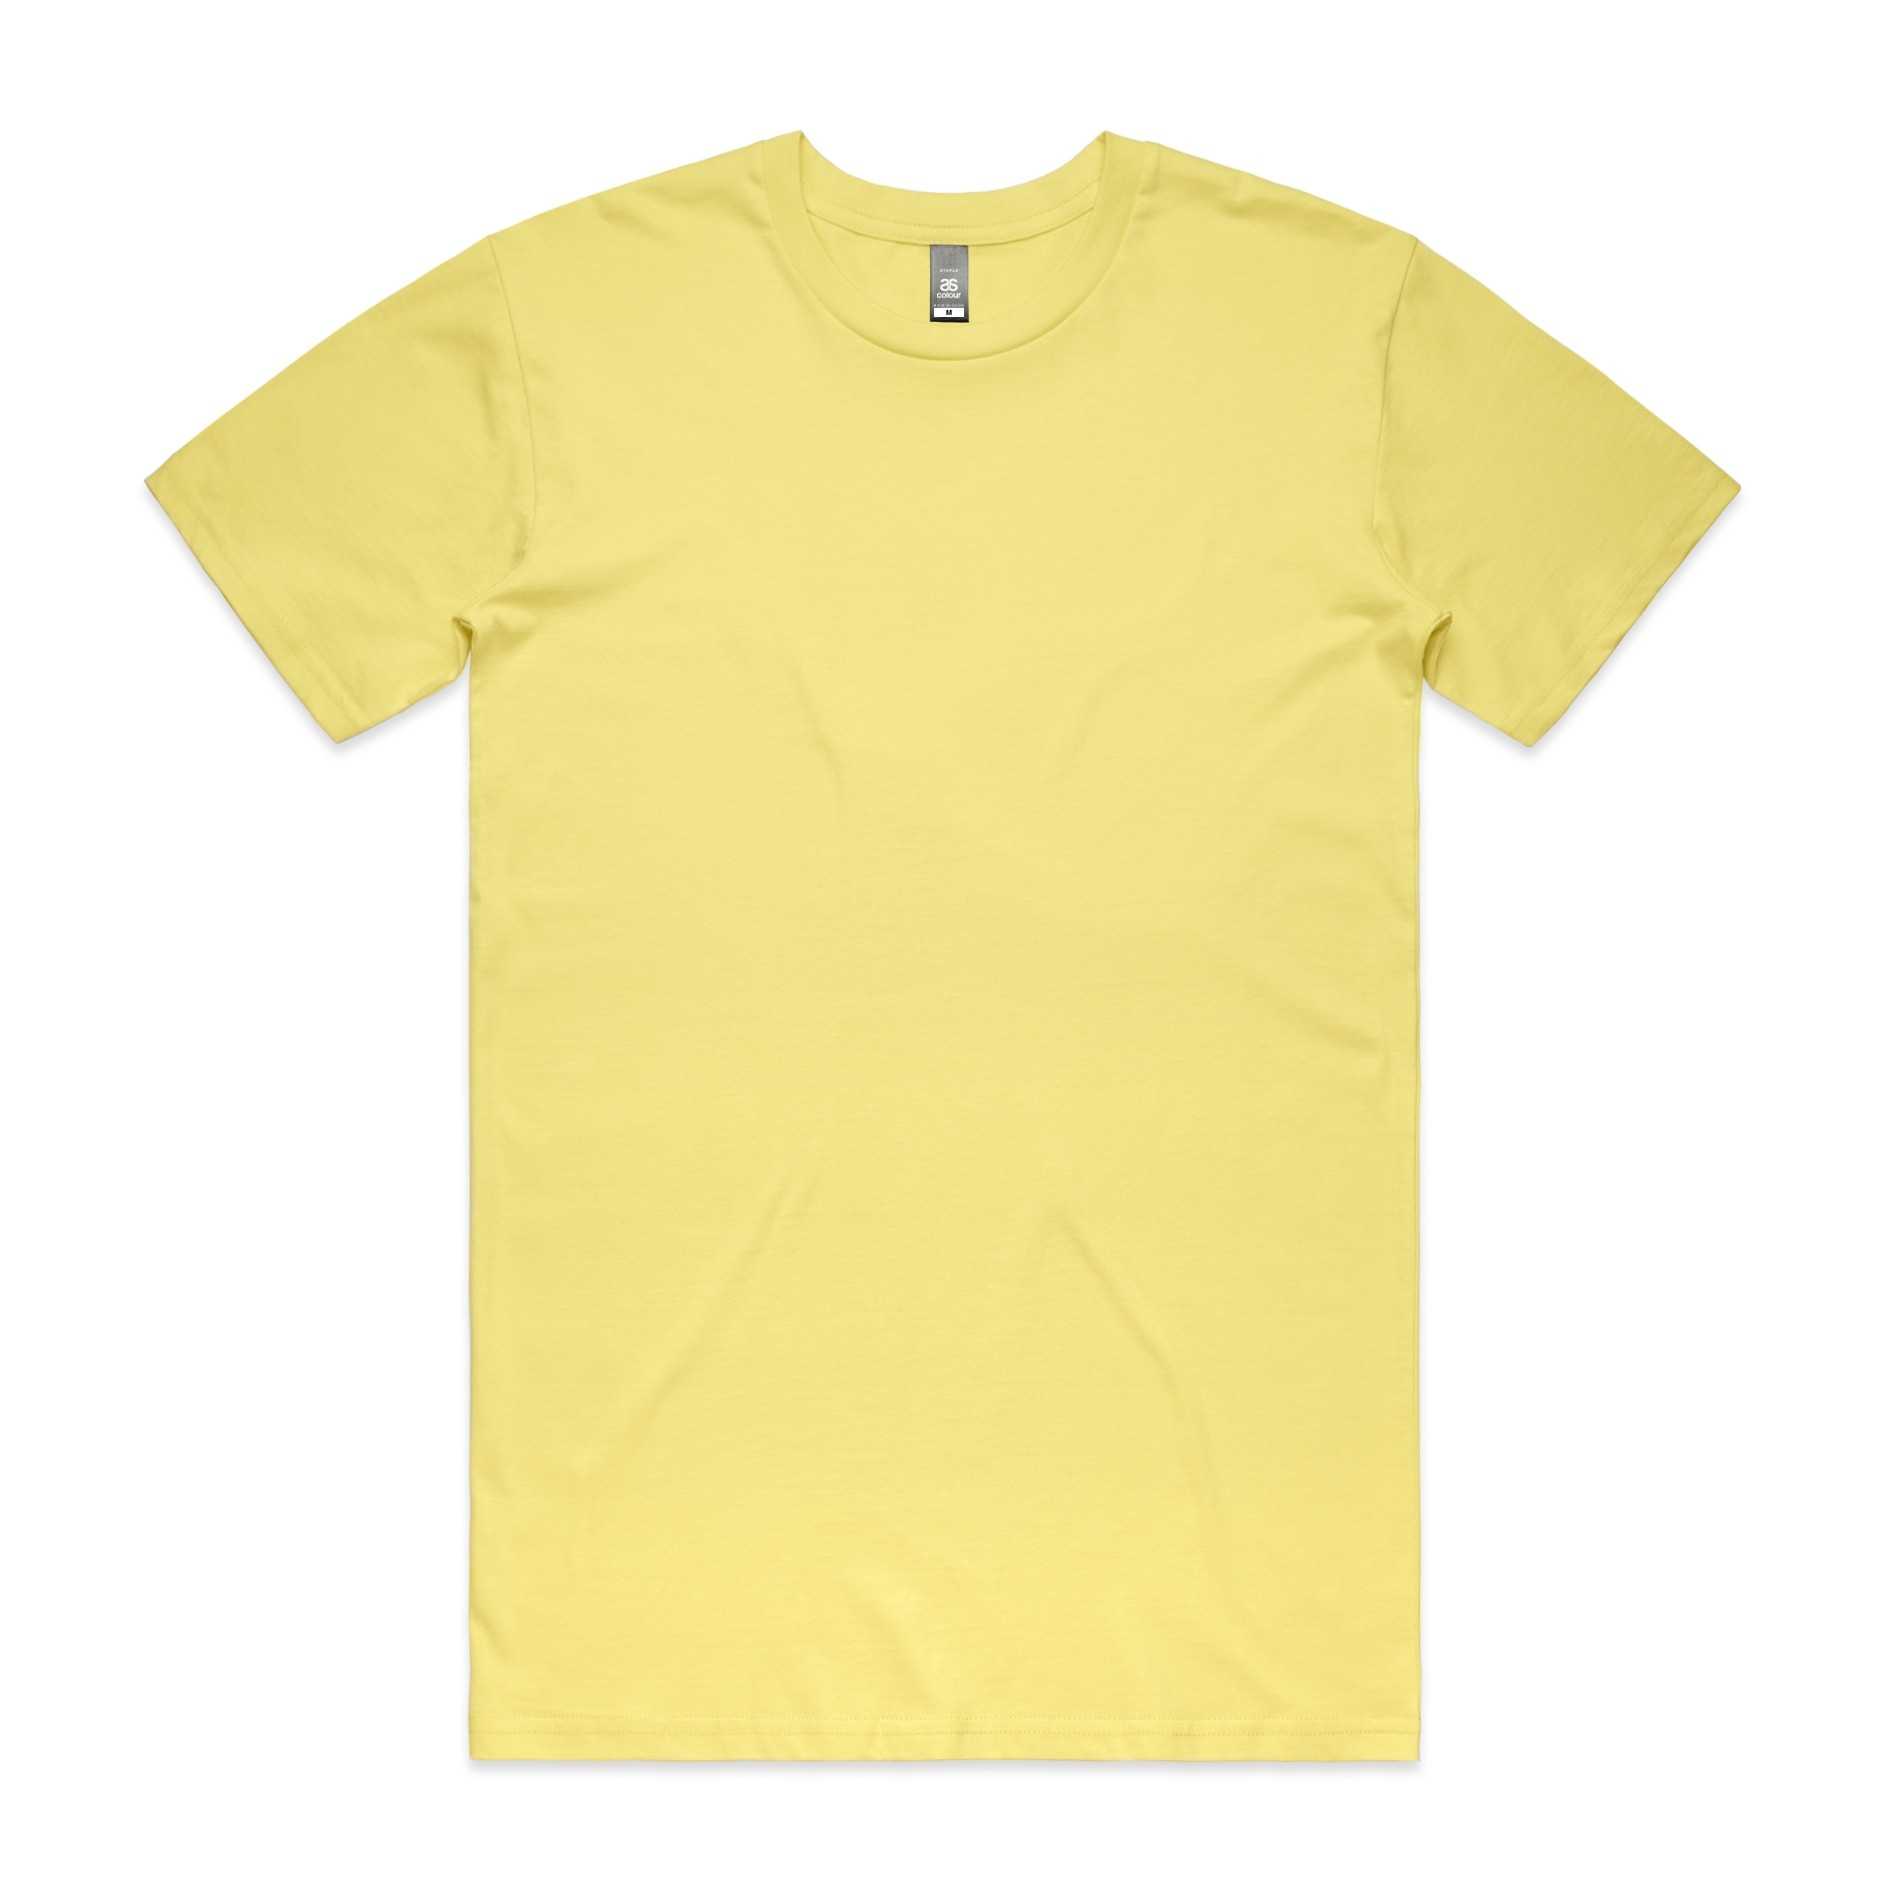 Printable Blank Tshirt Template – Nils Stucki Kieferorthopäde Within Printable Blank Tshirt Template